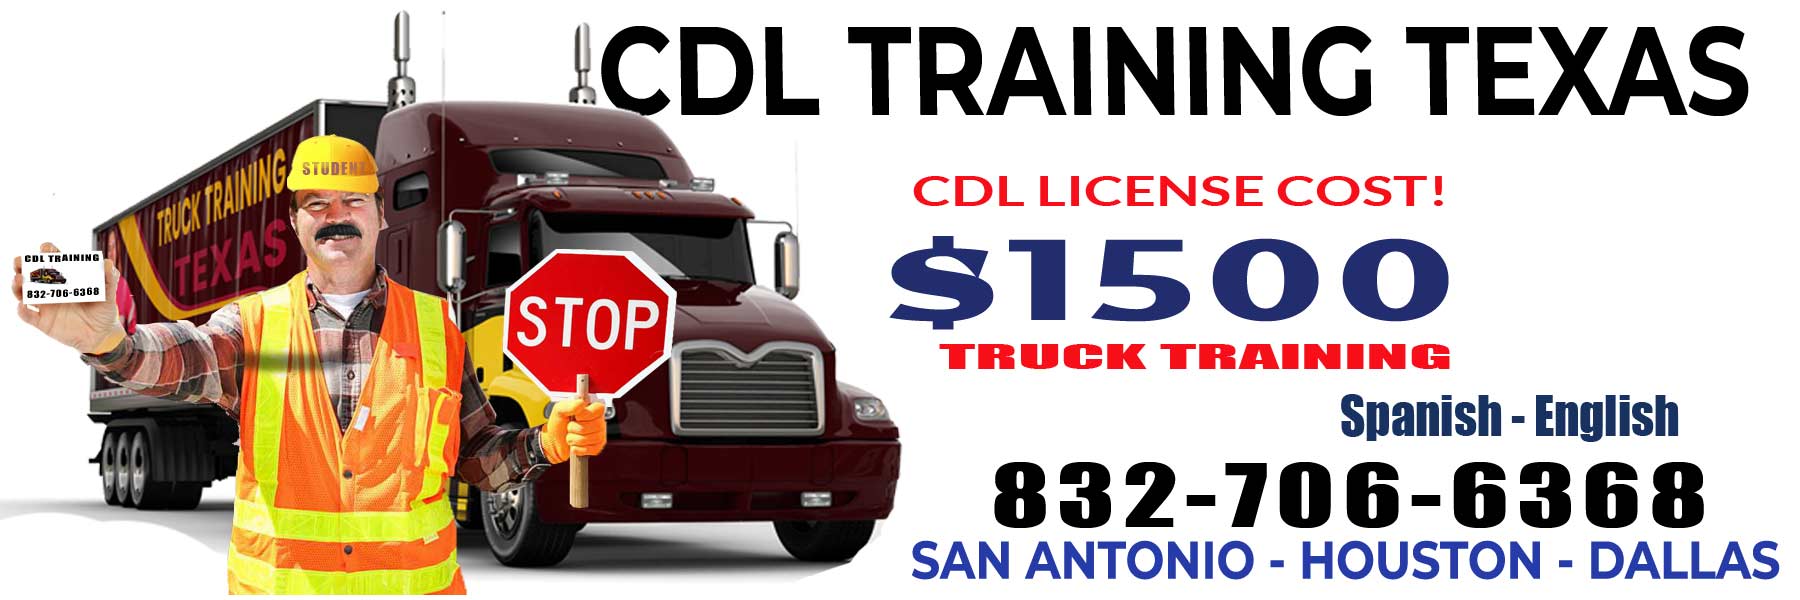 CDL School Friendswood TX, Spanish English Price $1500